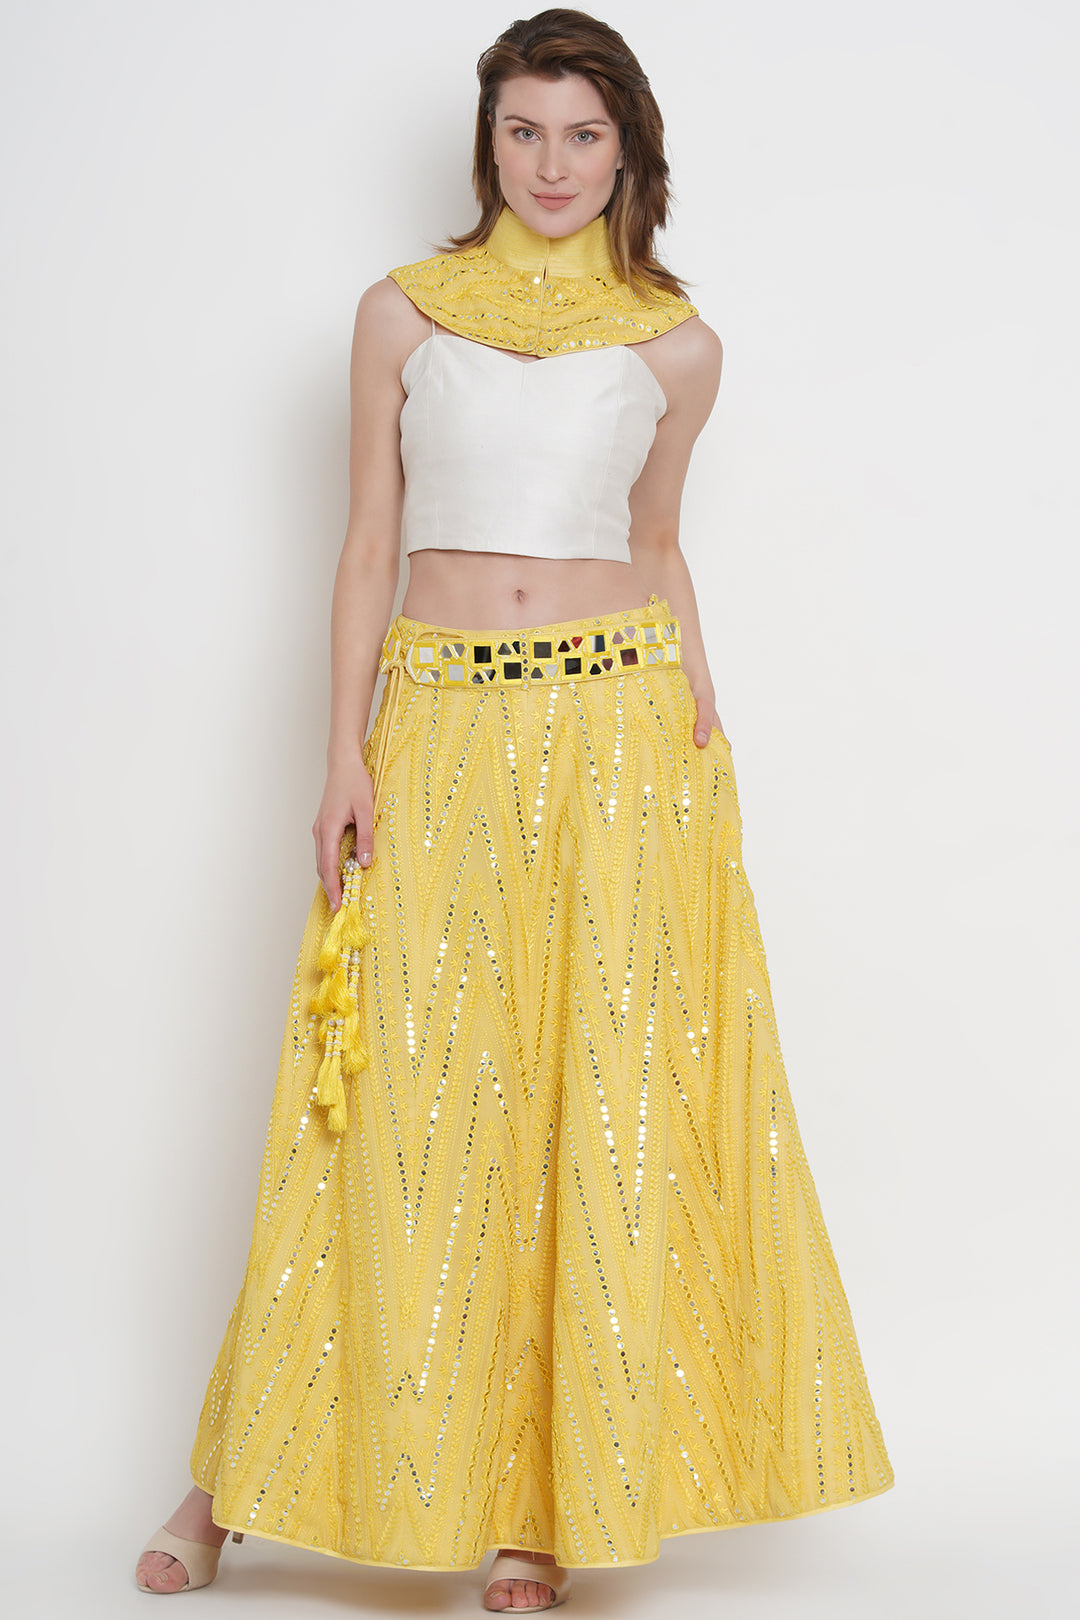 Yellow Mirrorwork Lehanga Skirt with Embellished belt